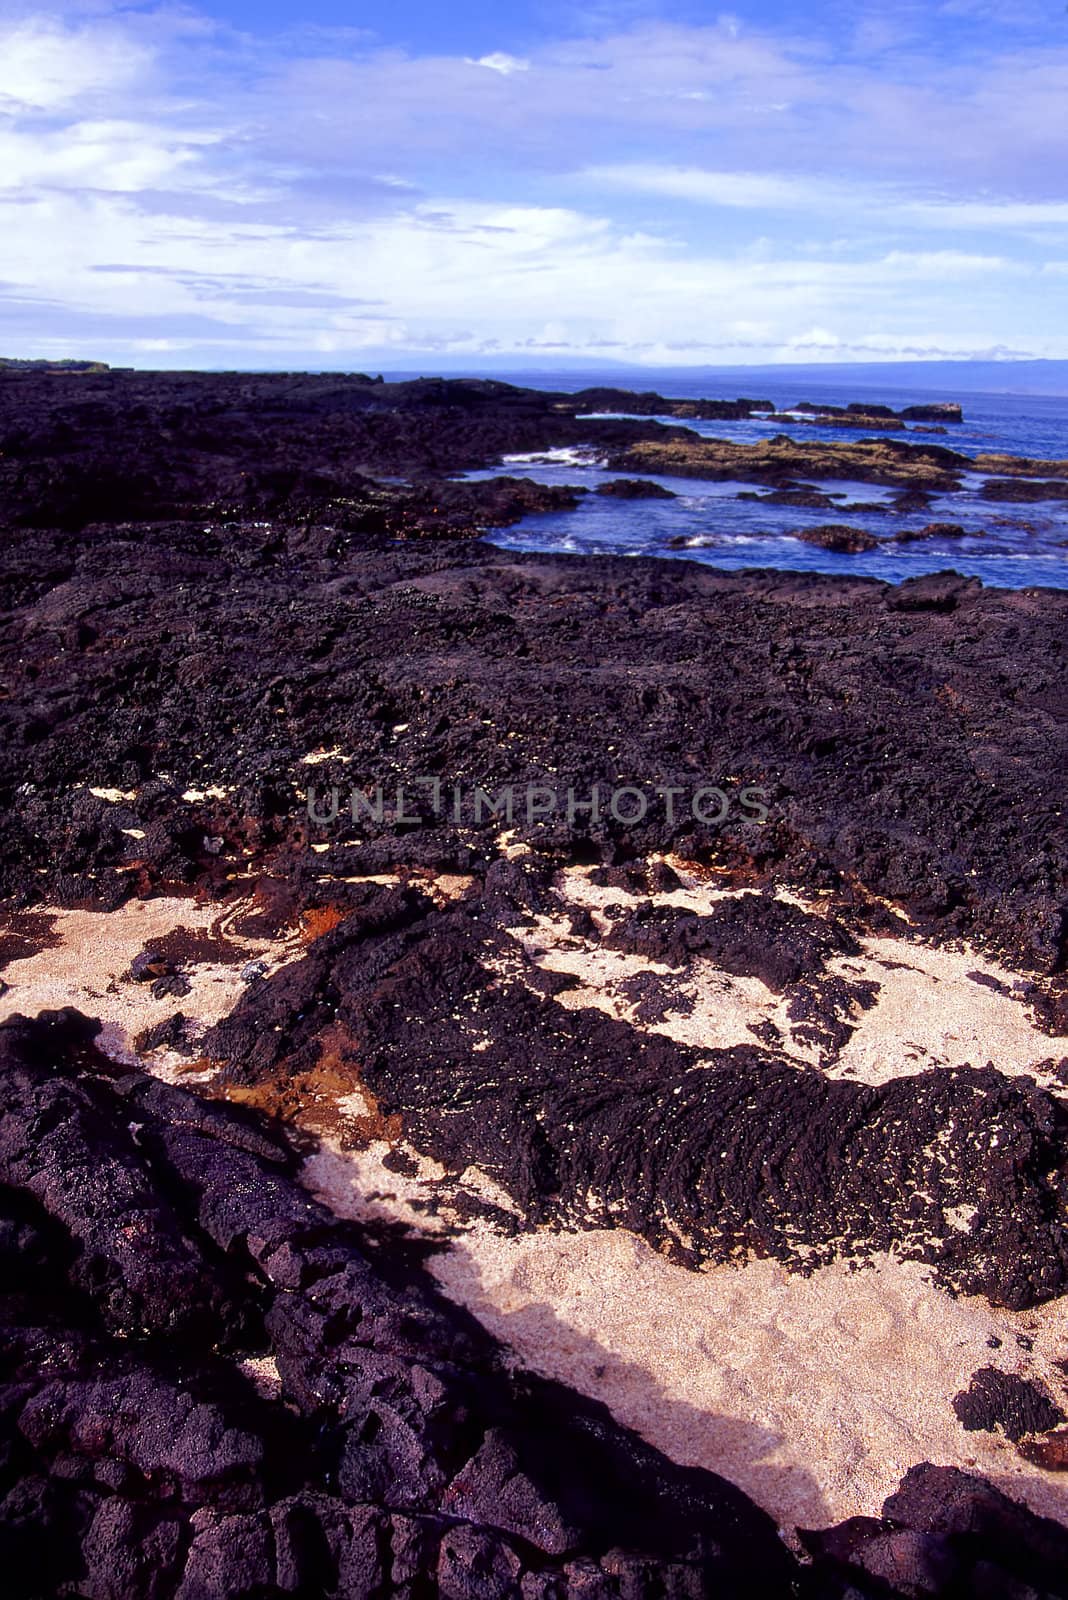 Volcanic rock covers the beach near Puerto Egas on Santiago - Galapagos Islands.